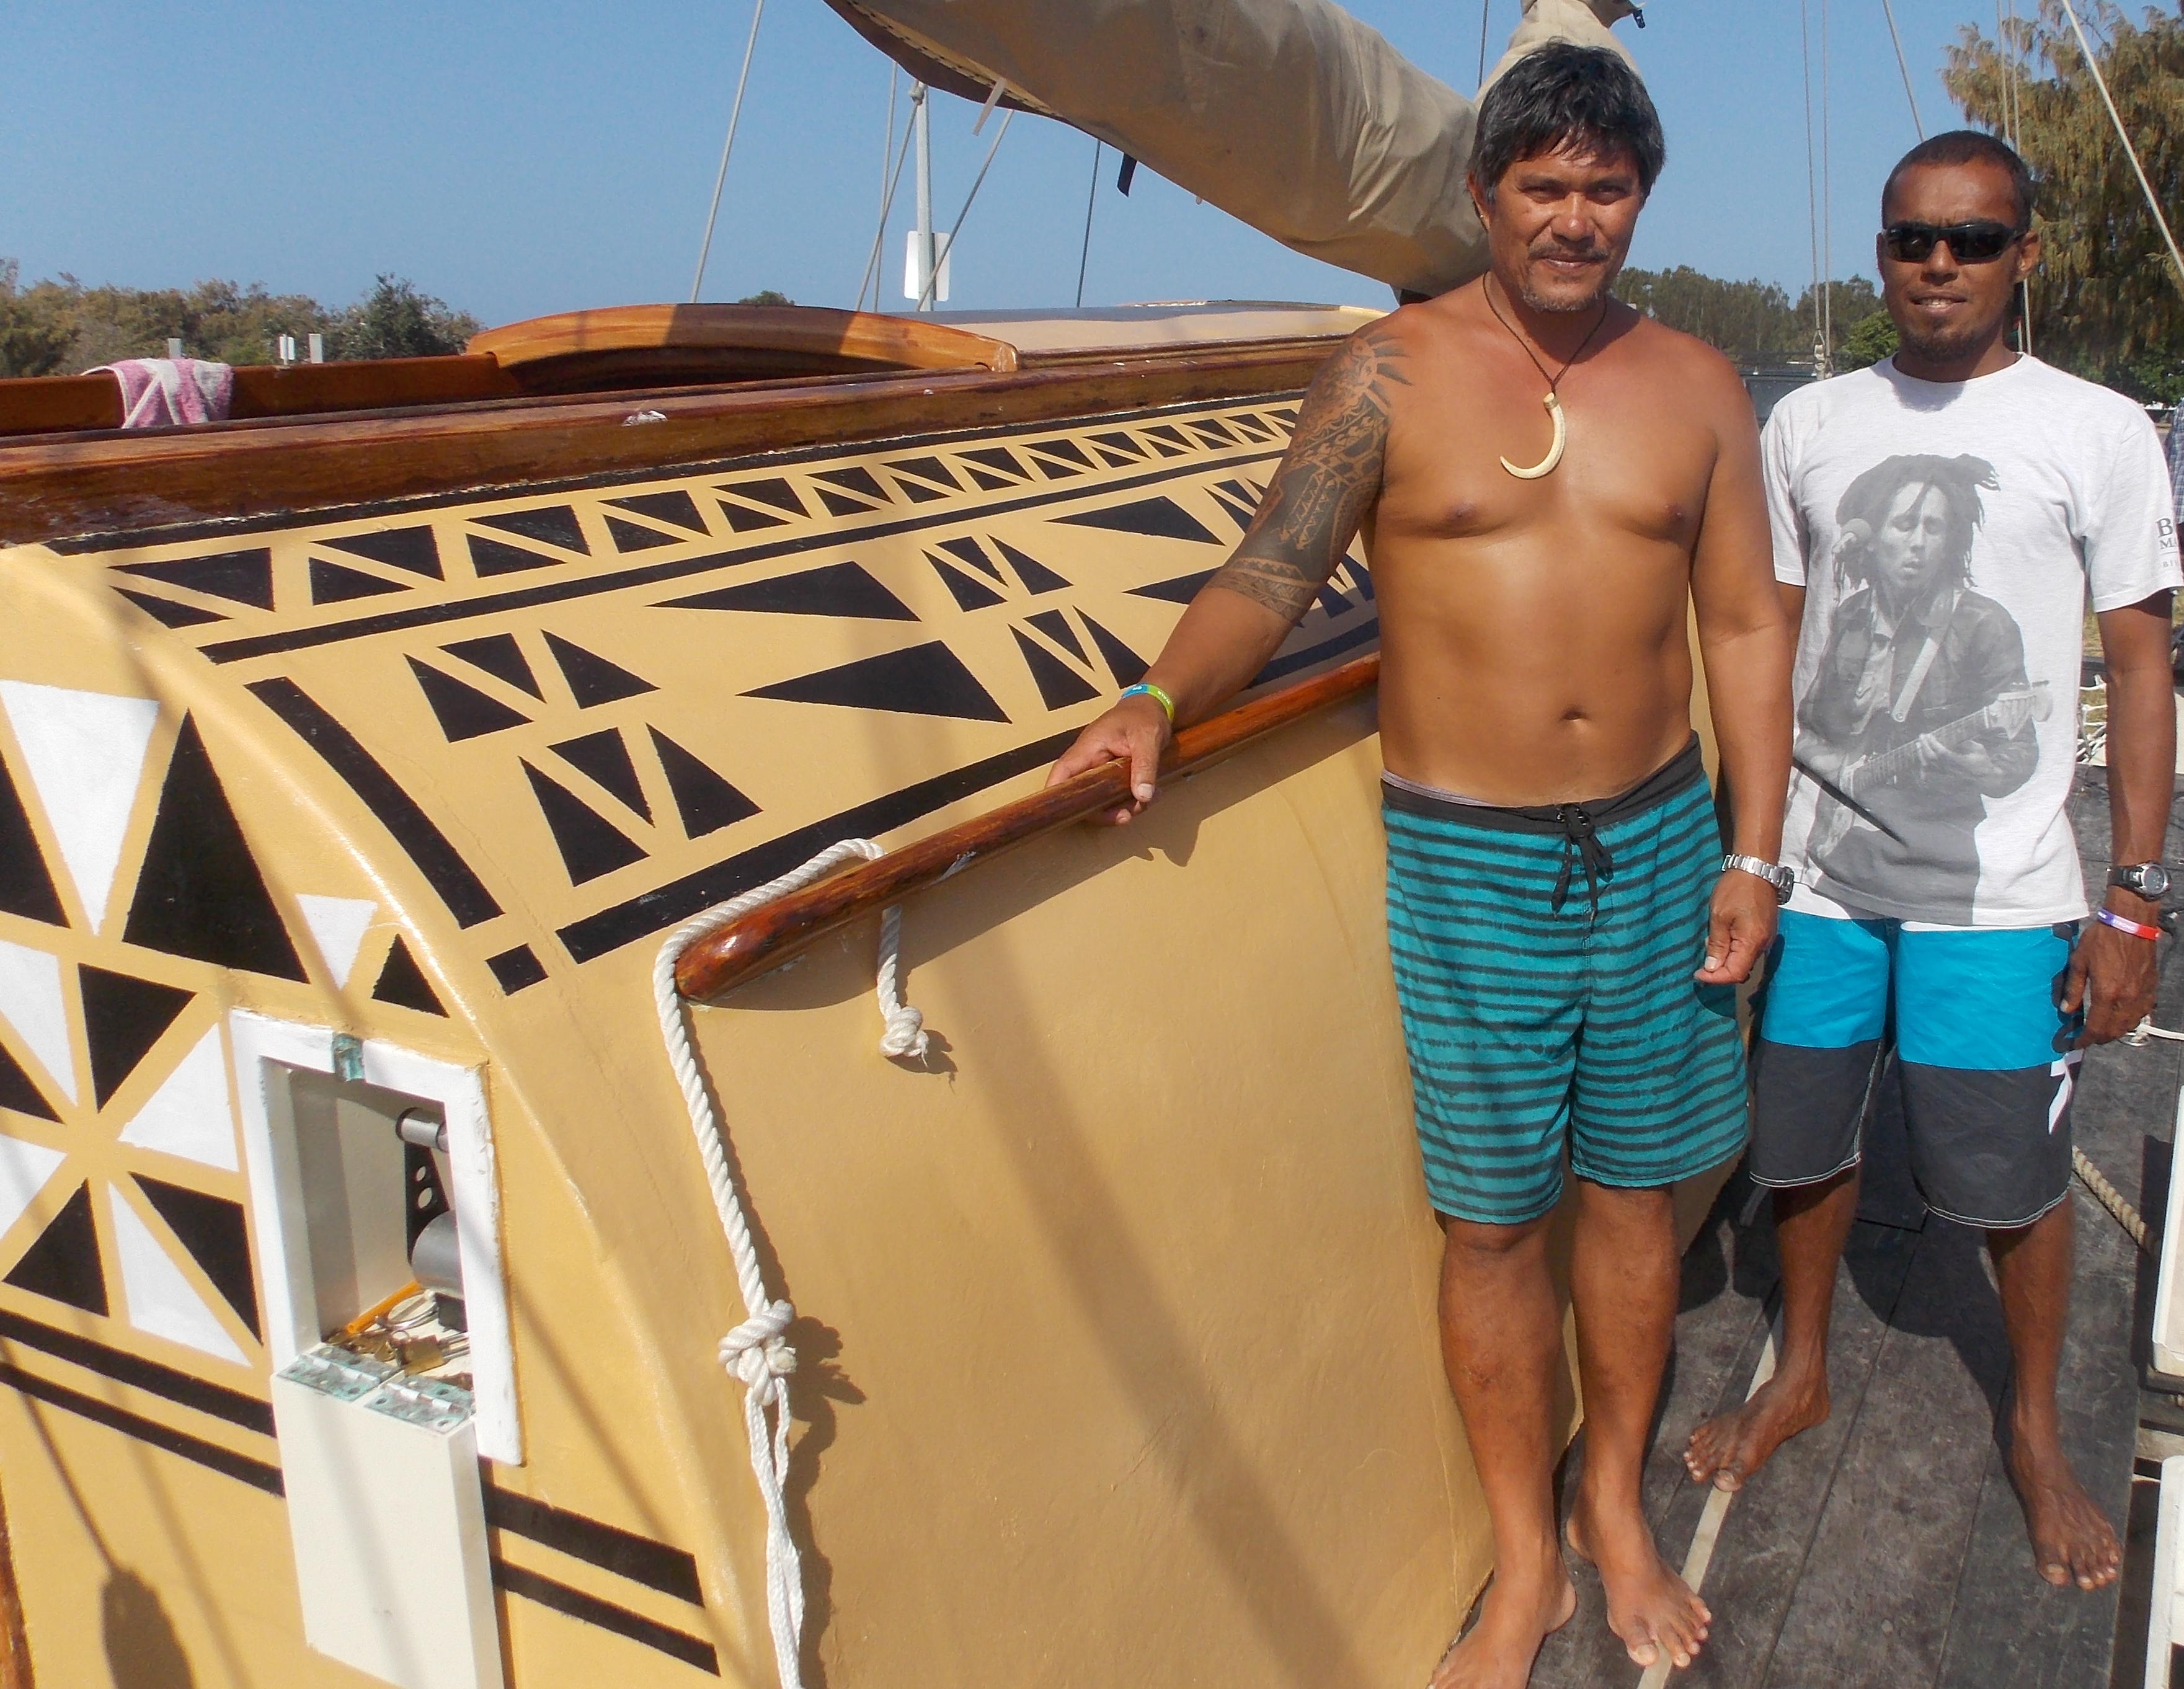 Pacific Islander sailors Peia Patai and Angelo Smith aboard a traditional ocean canoe